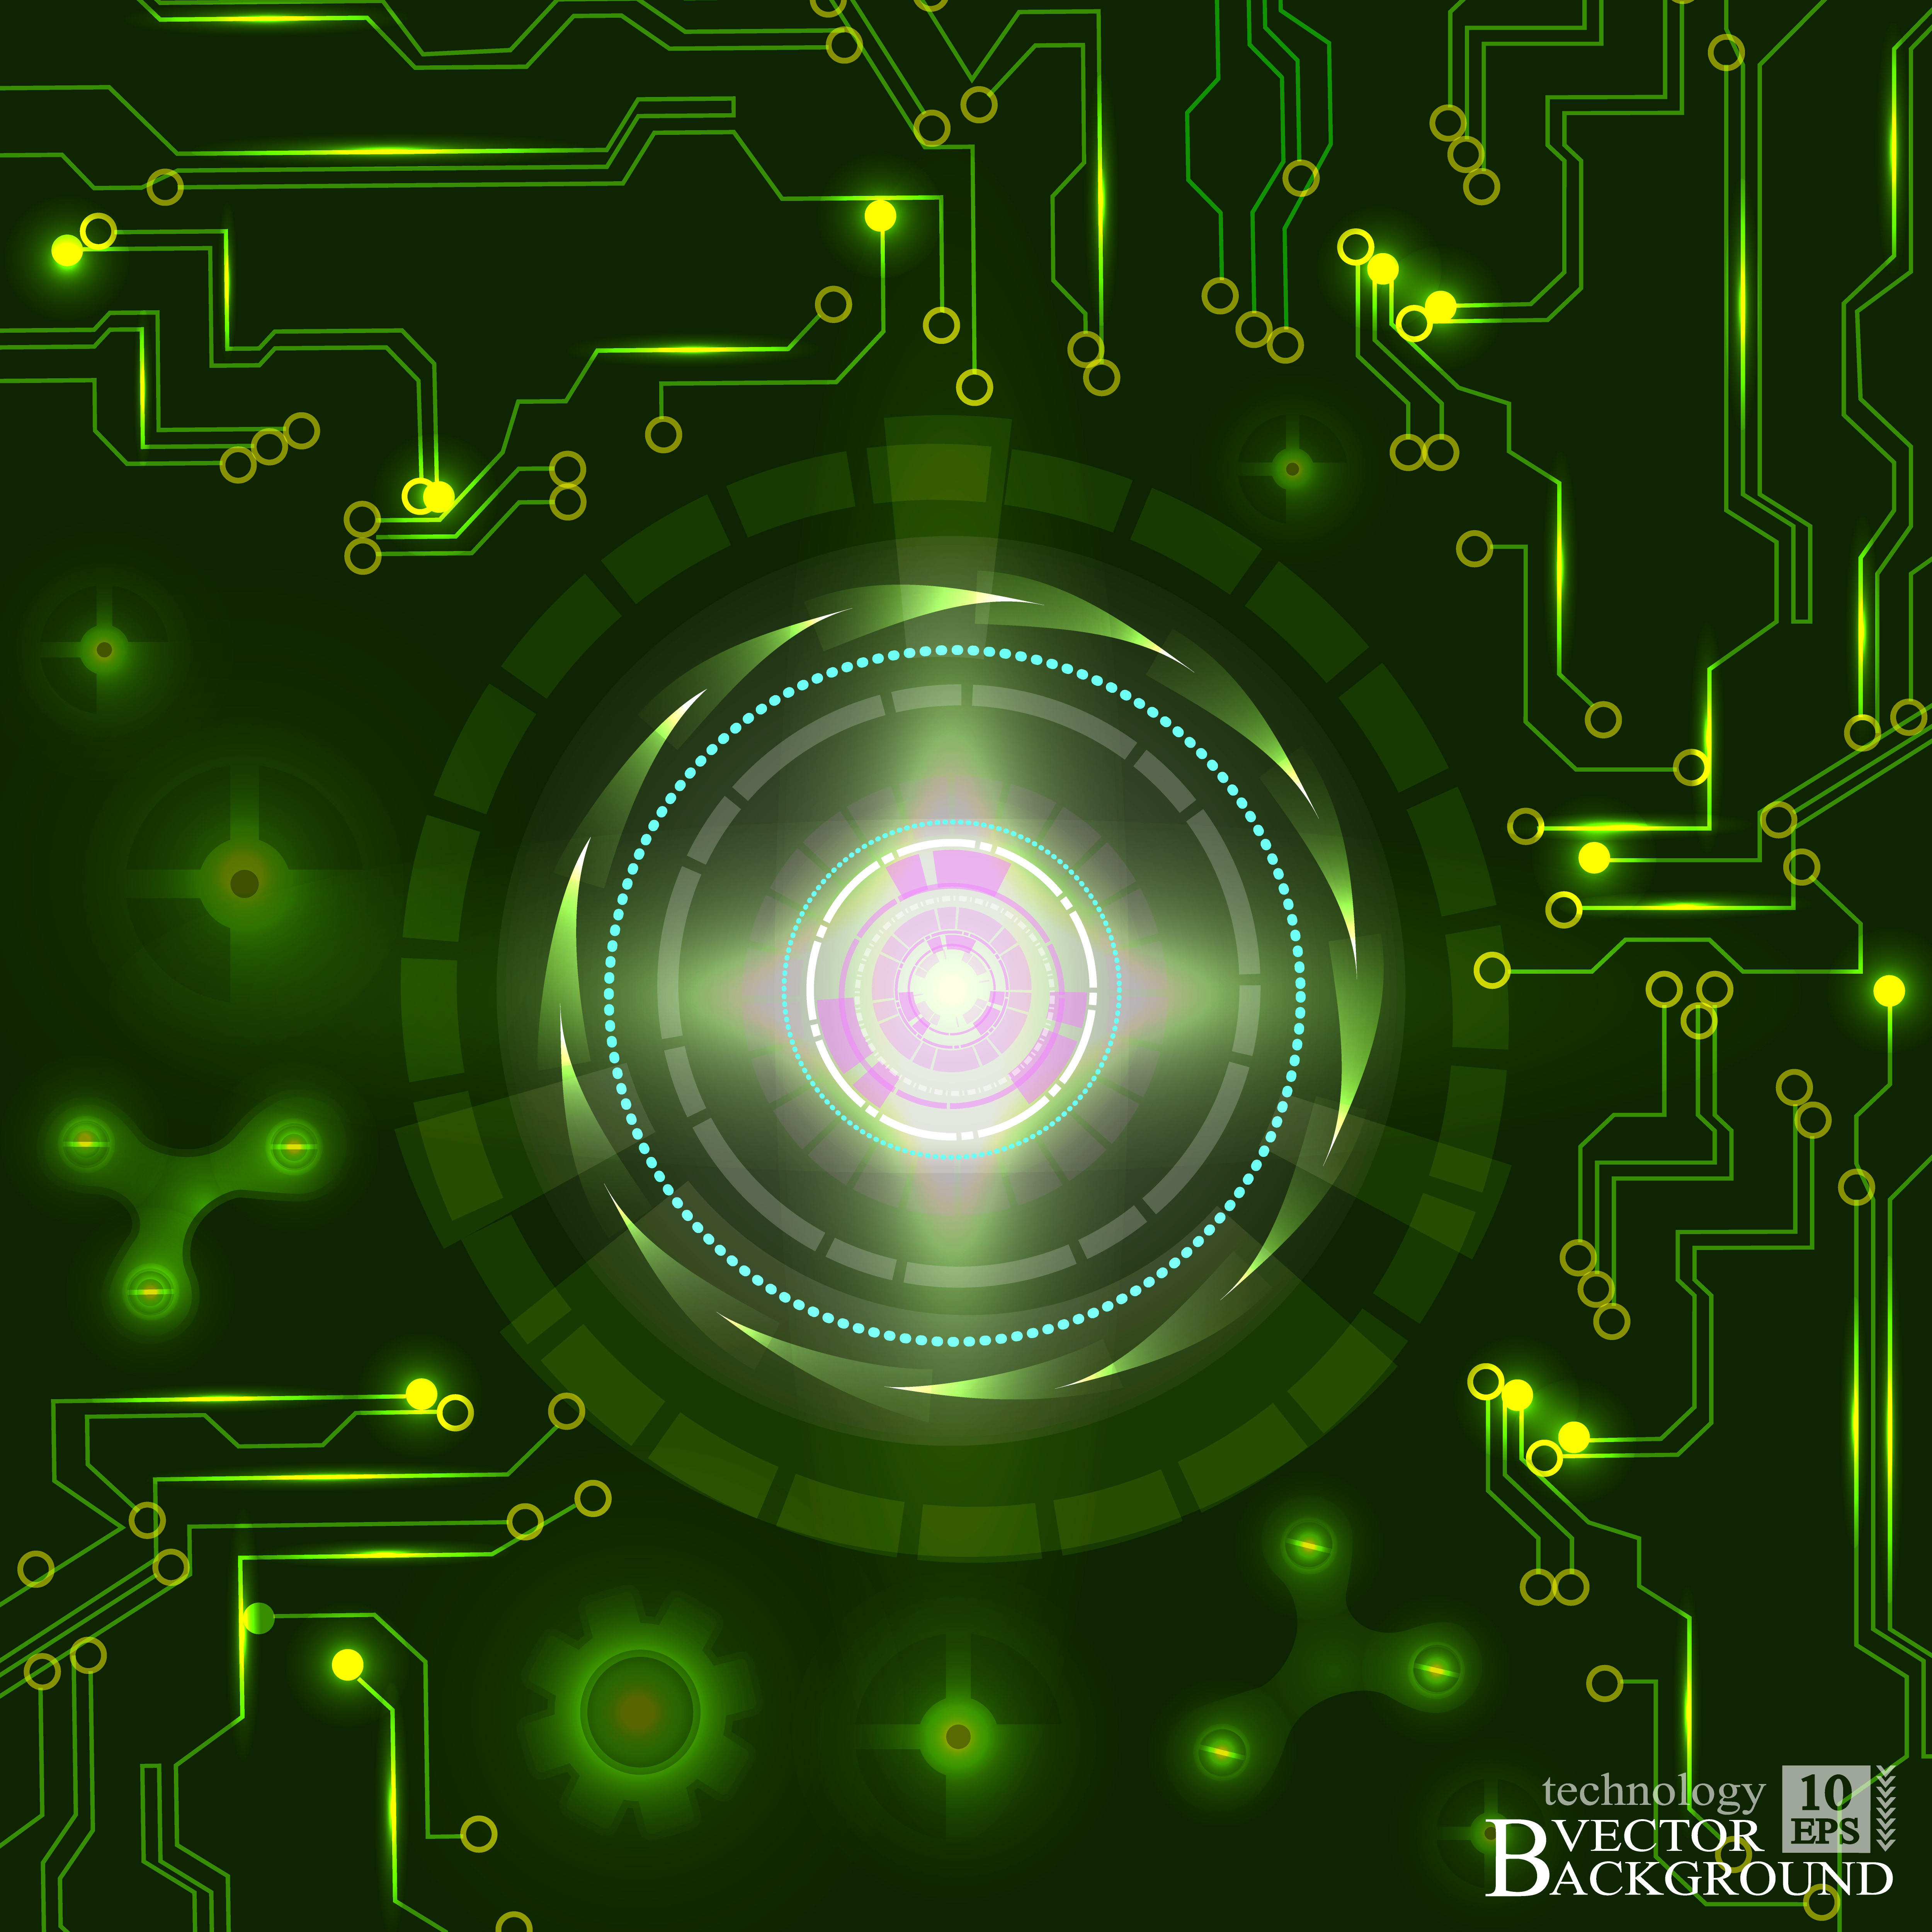 Бесплатное фото Процессор и микросхема на зеленом фоне